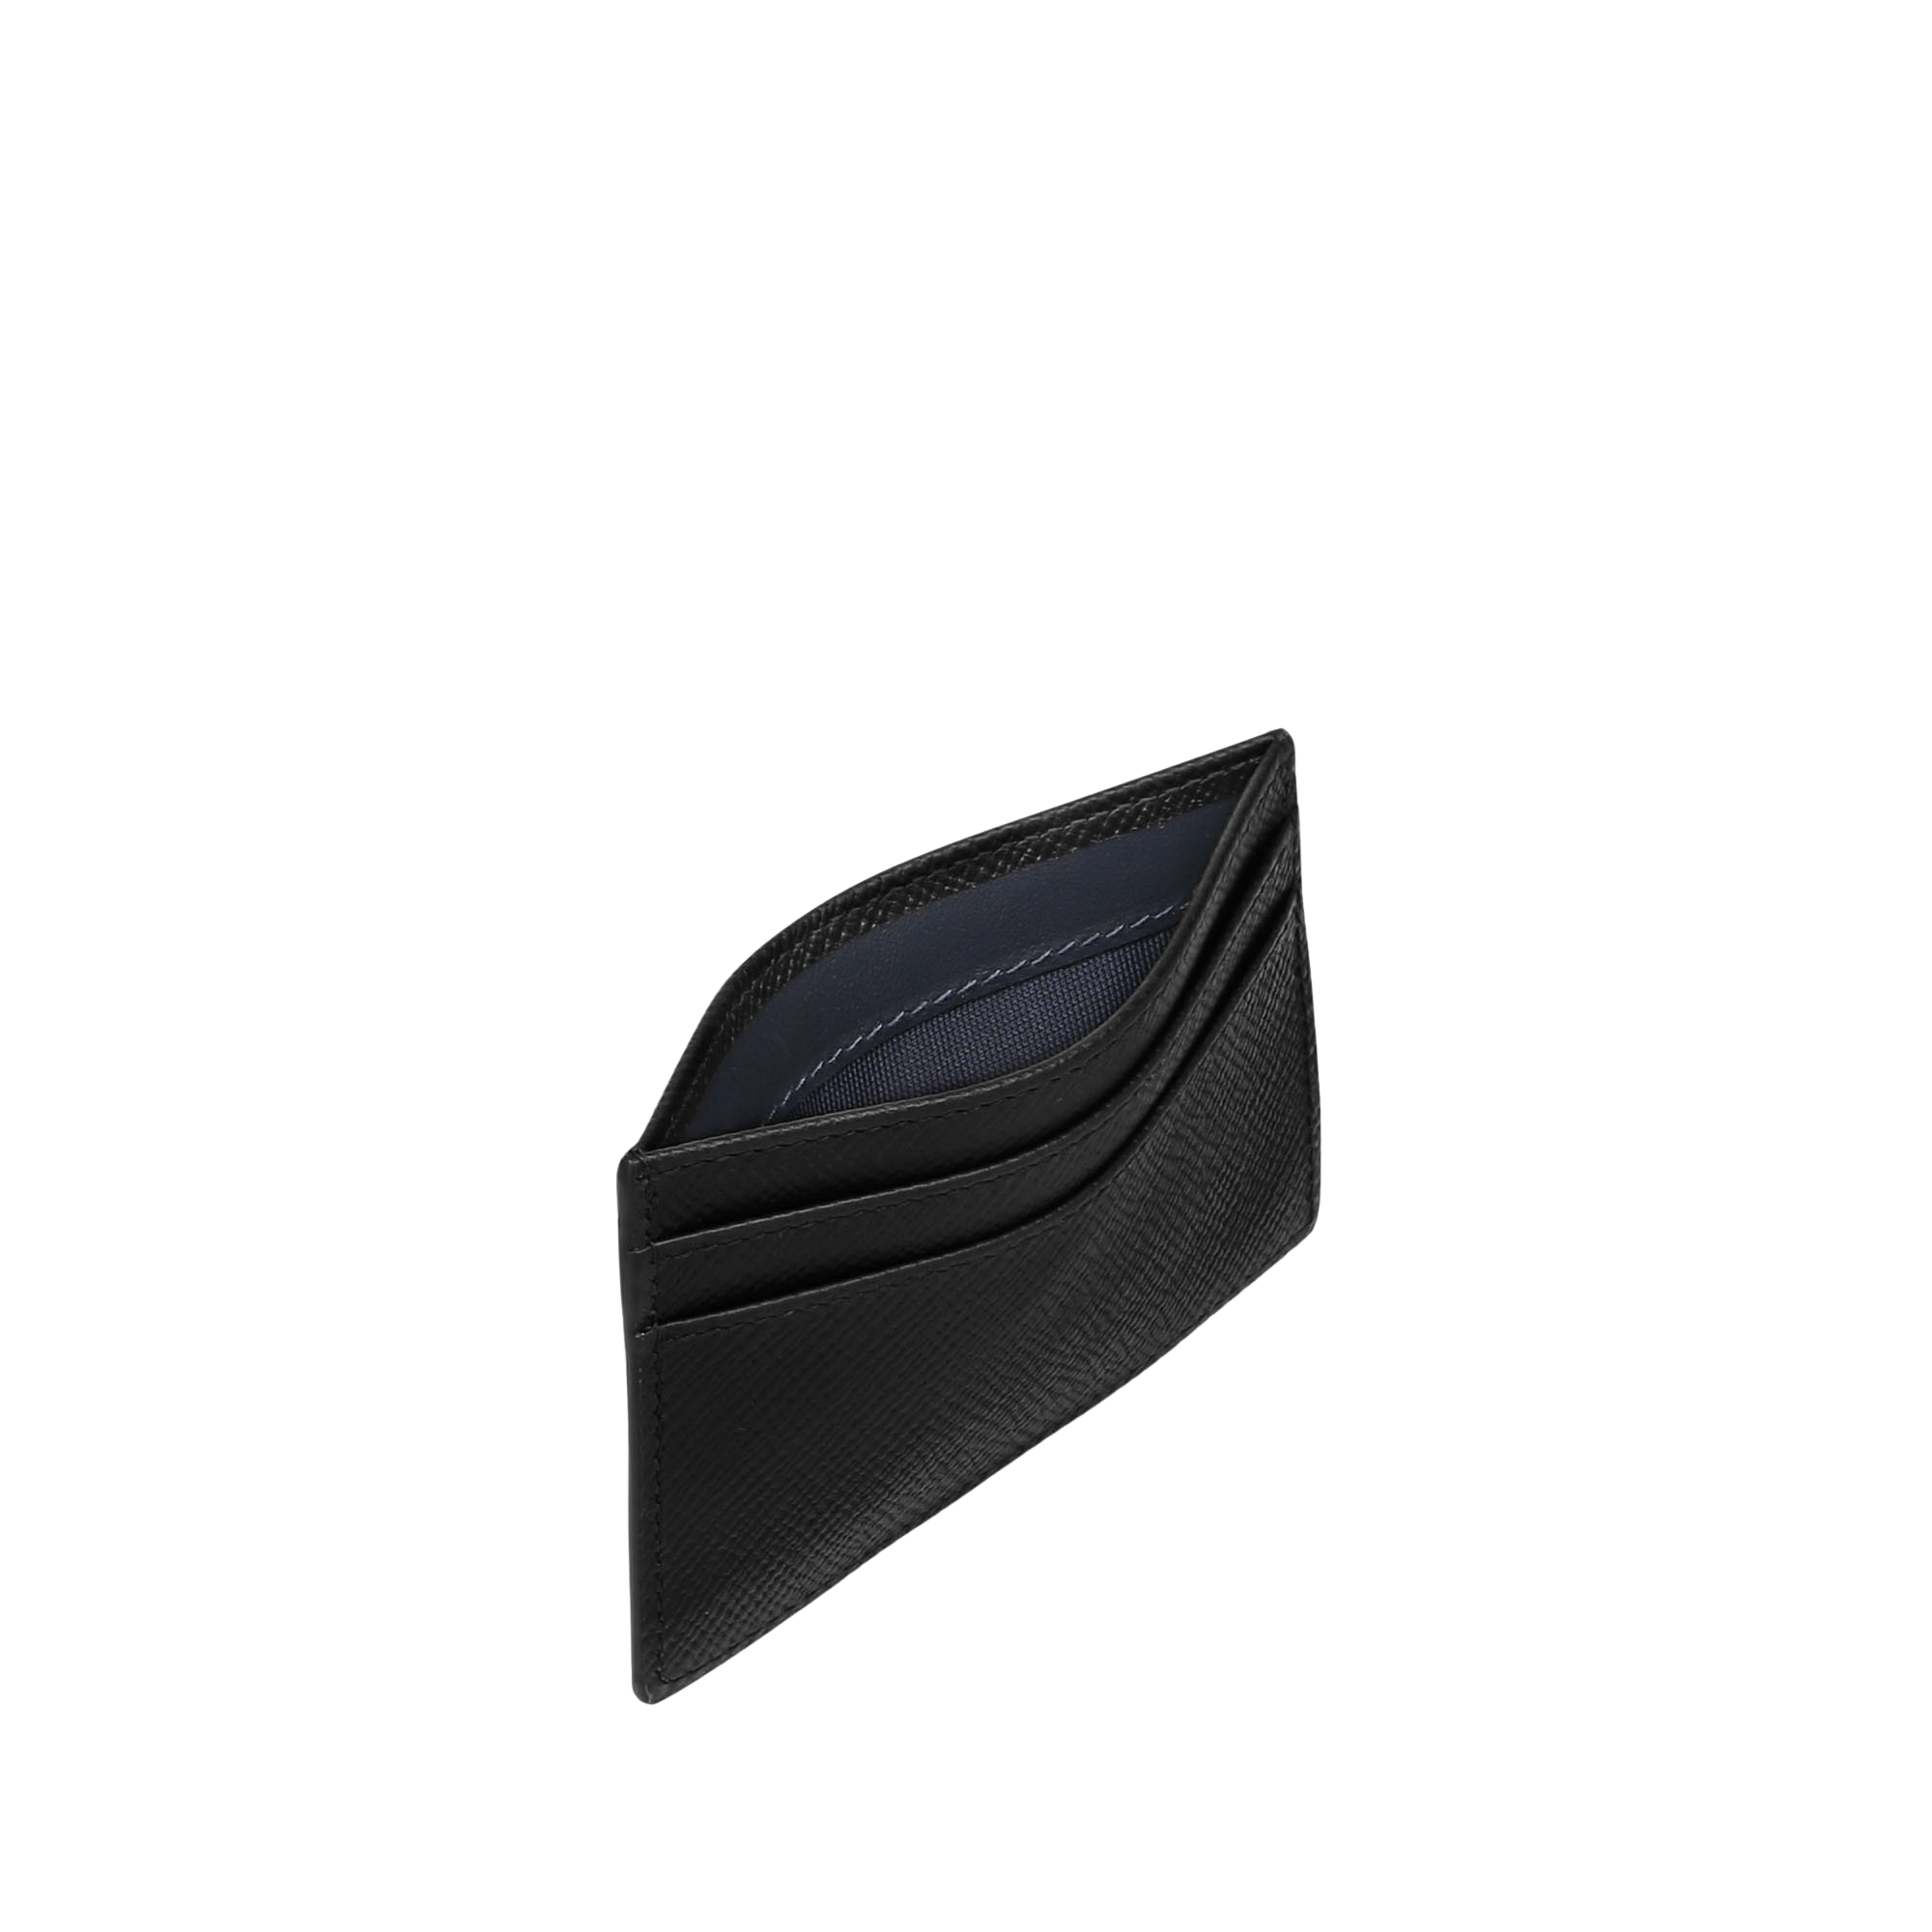 Smythson Bring It On Panama Leather Notebook in Black 1022273 BLACK  5056027656909 - Jomashop